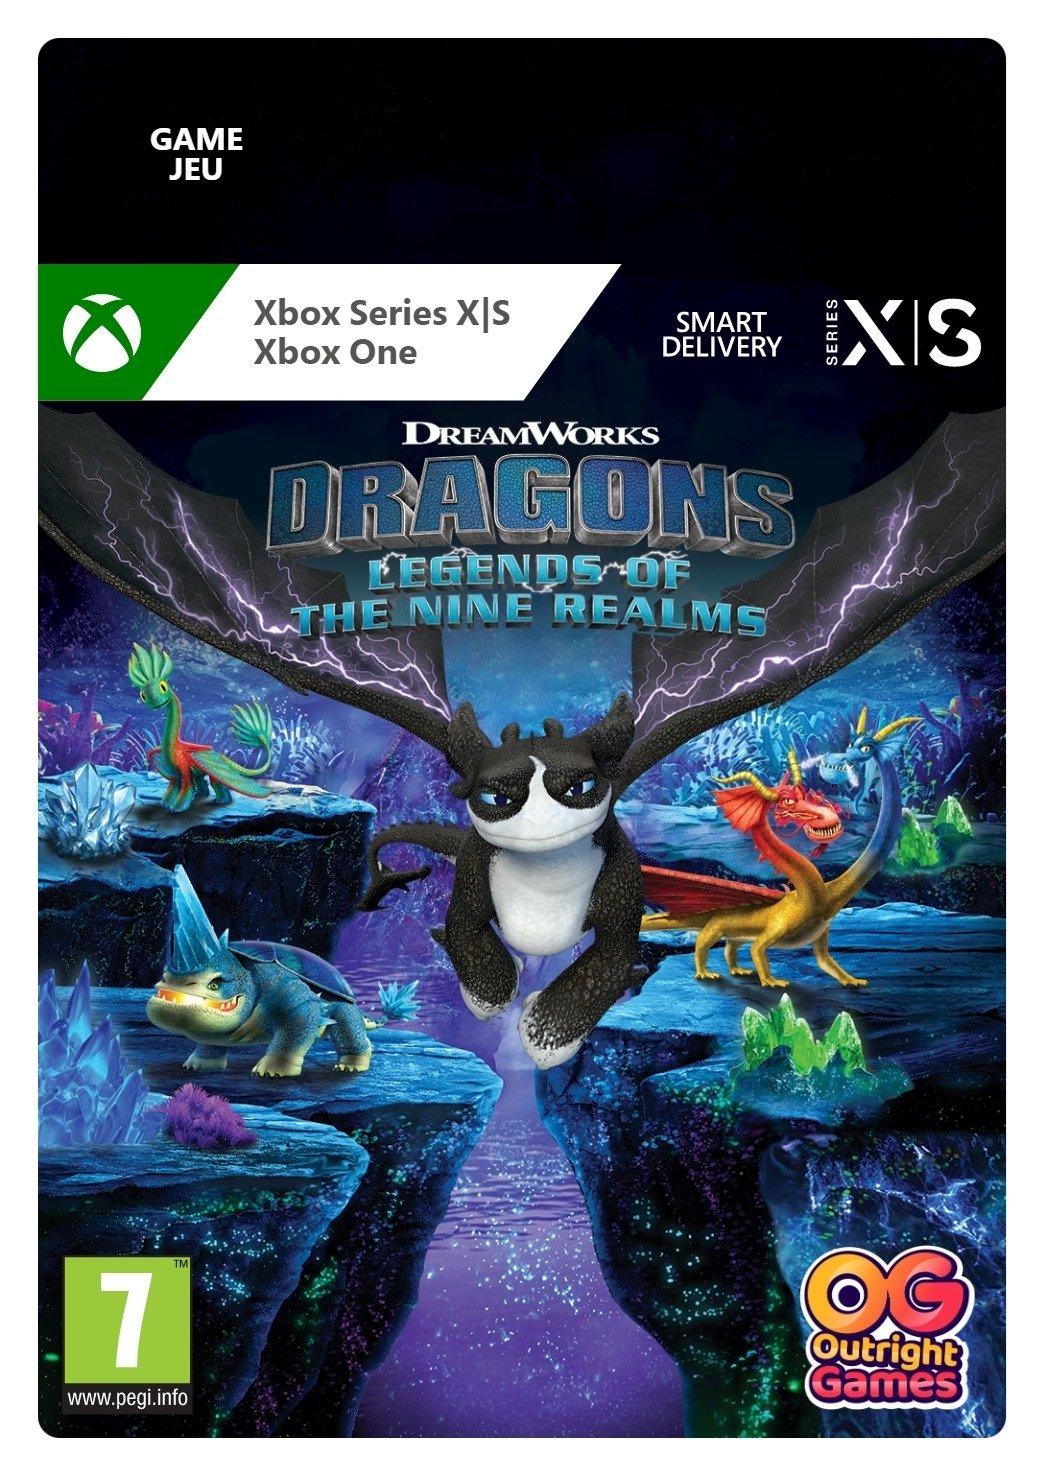 DreamWorks Dragons: Legends of the Nine Realms - Xbox Series X/Xbox One - Game | G3Q-01329 (f9533bf1-446f-944e-854f-9207c7cdd1b2)